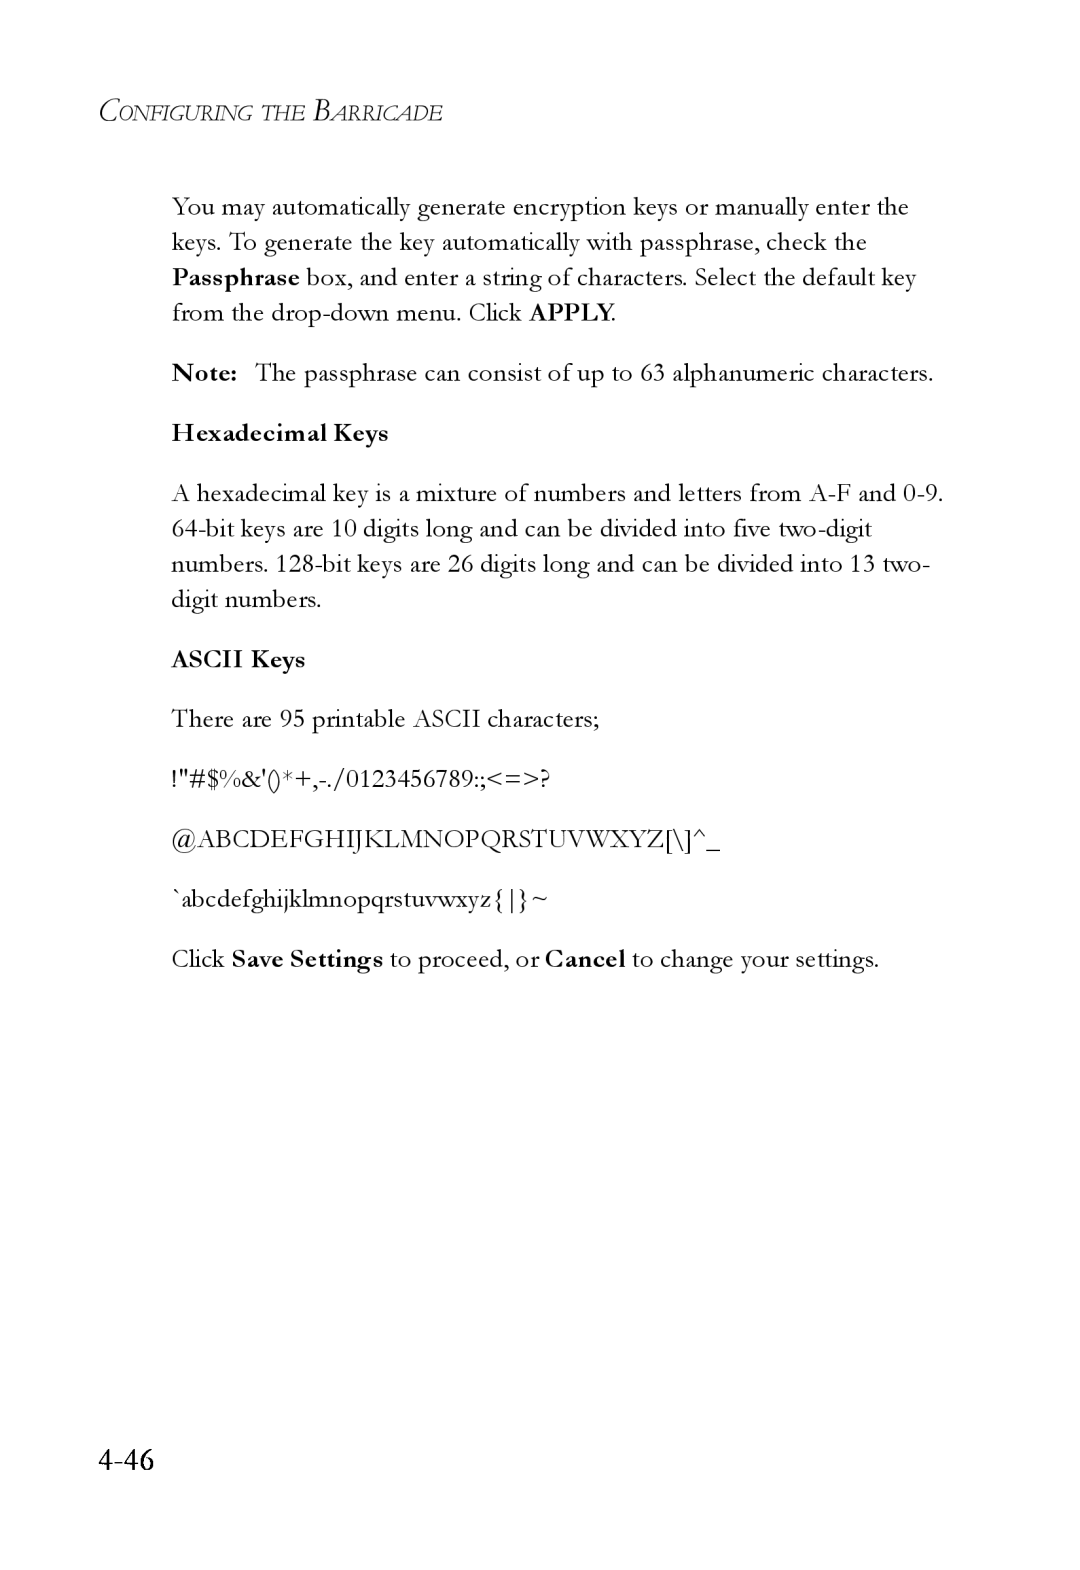 SMC Networks SMCWBR14T-G manual 4-46, Hexadecimal Keys, ASCII Keys 